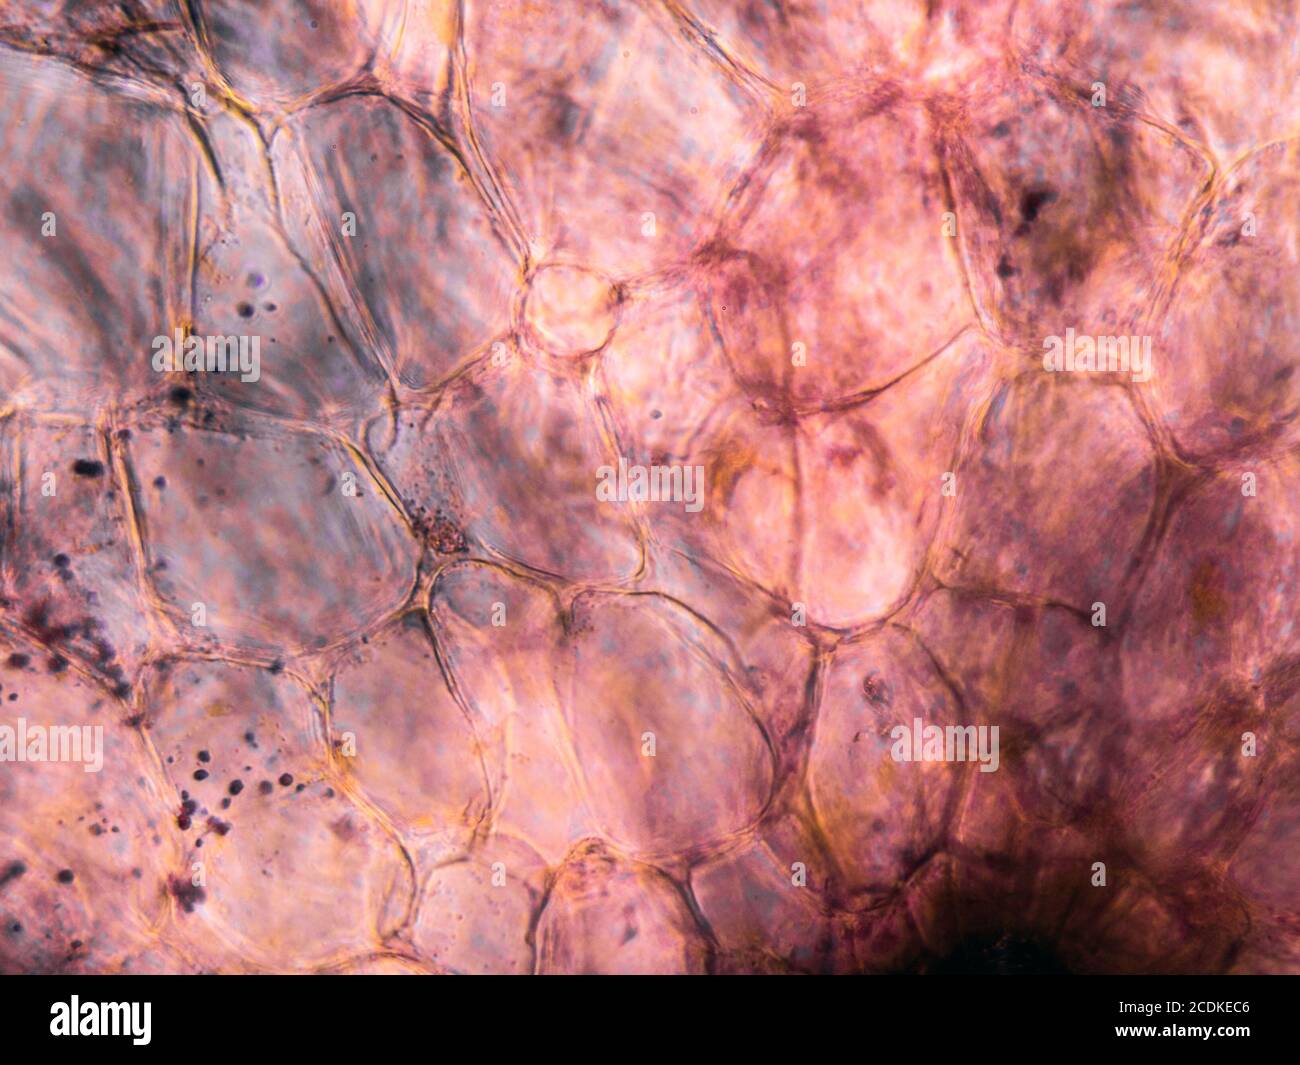 Vista microscópica de las células de raíz de zanahoria teñidas. Sección transversal. Microscopio compuesto óptico. Campo claro. Objetivo 40x. Foto de stock